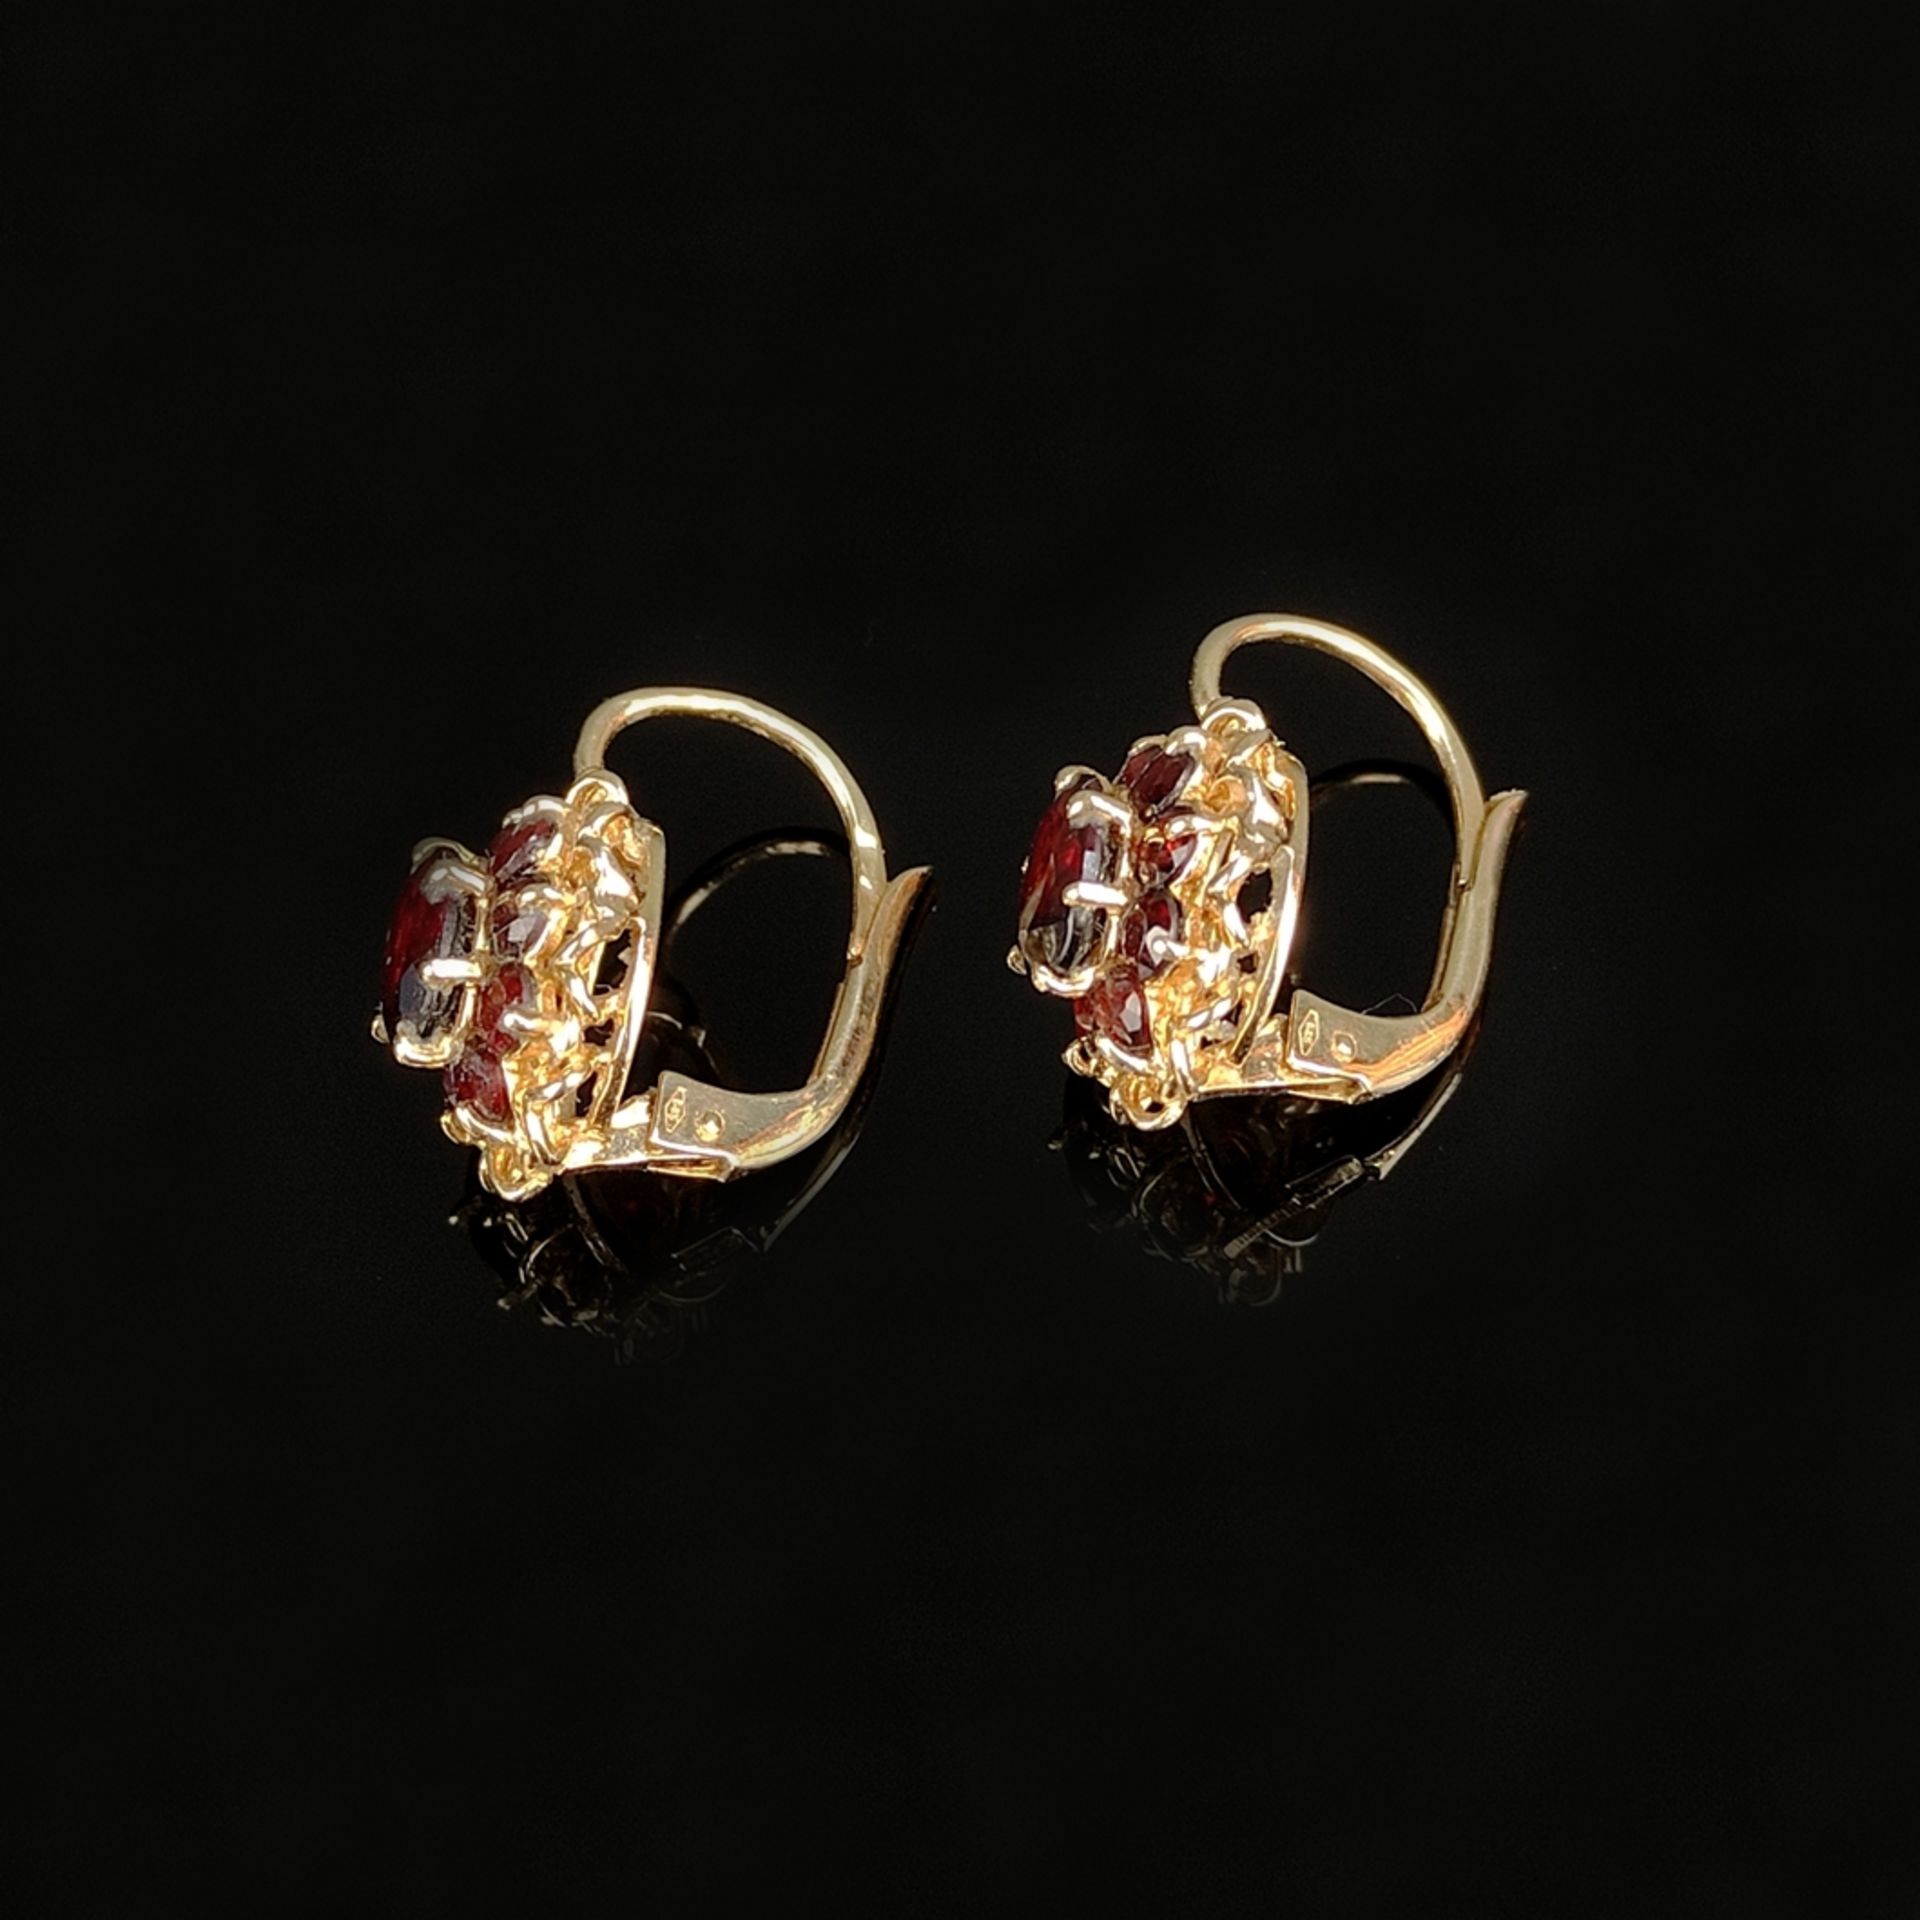 Granat-Ohrringe, 585/14K Gelbgold (punziert), 4,58g, Ohrhänger mit getreppter, blütenförmiger Abhän - Bild 2 aus 3